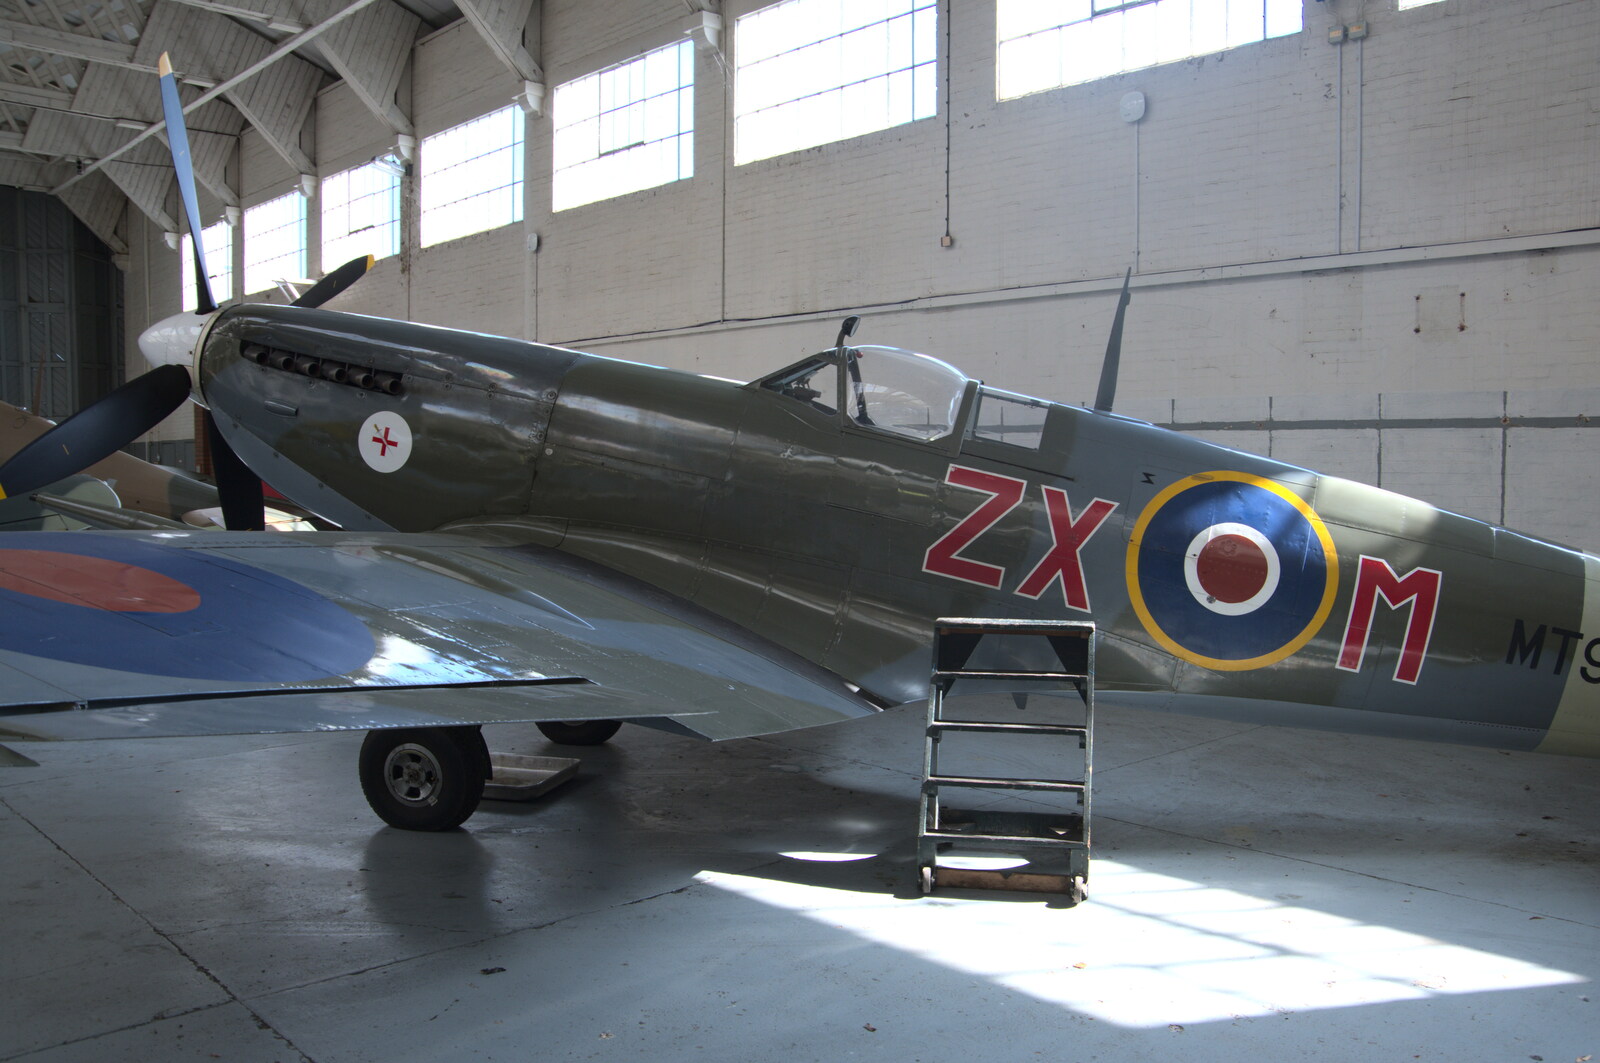 Spitfire ZX-M (MT928) from The Duxford Dash, IWM Duxford, Cambridge - 13th September 2020